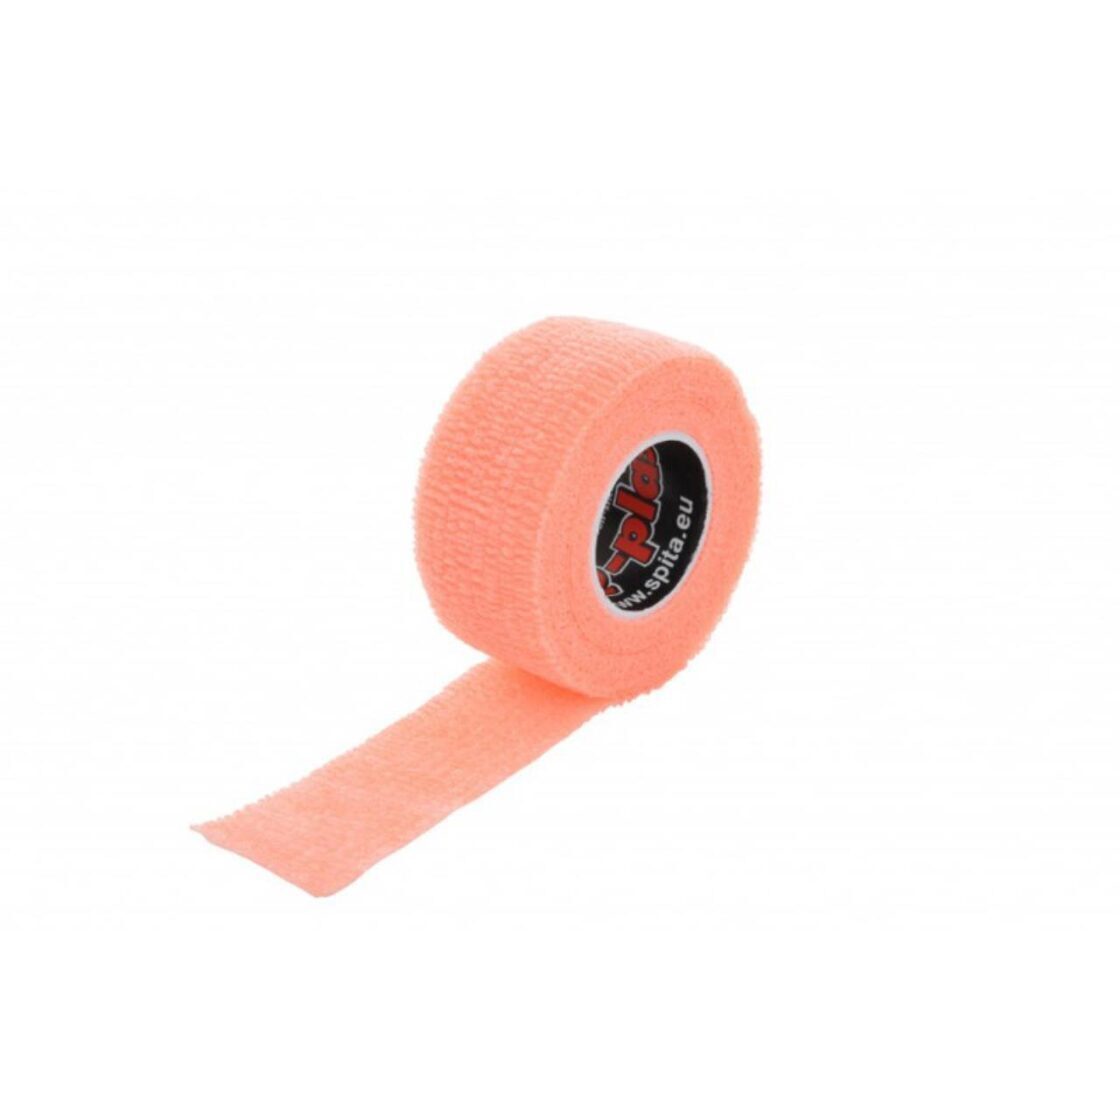 ResQ-Plast selbstklebender Verband 25mm breit rosa